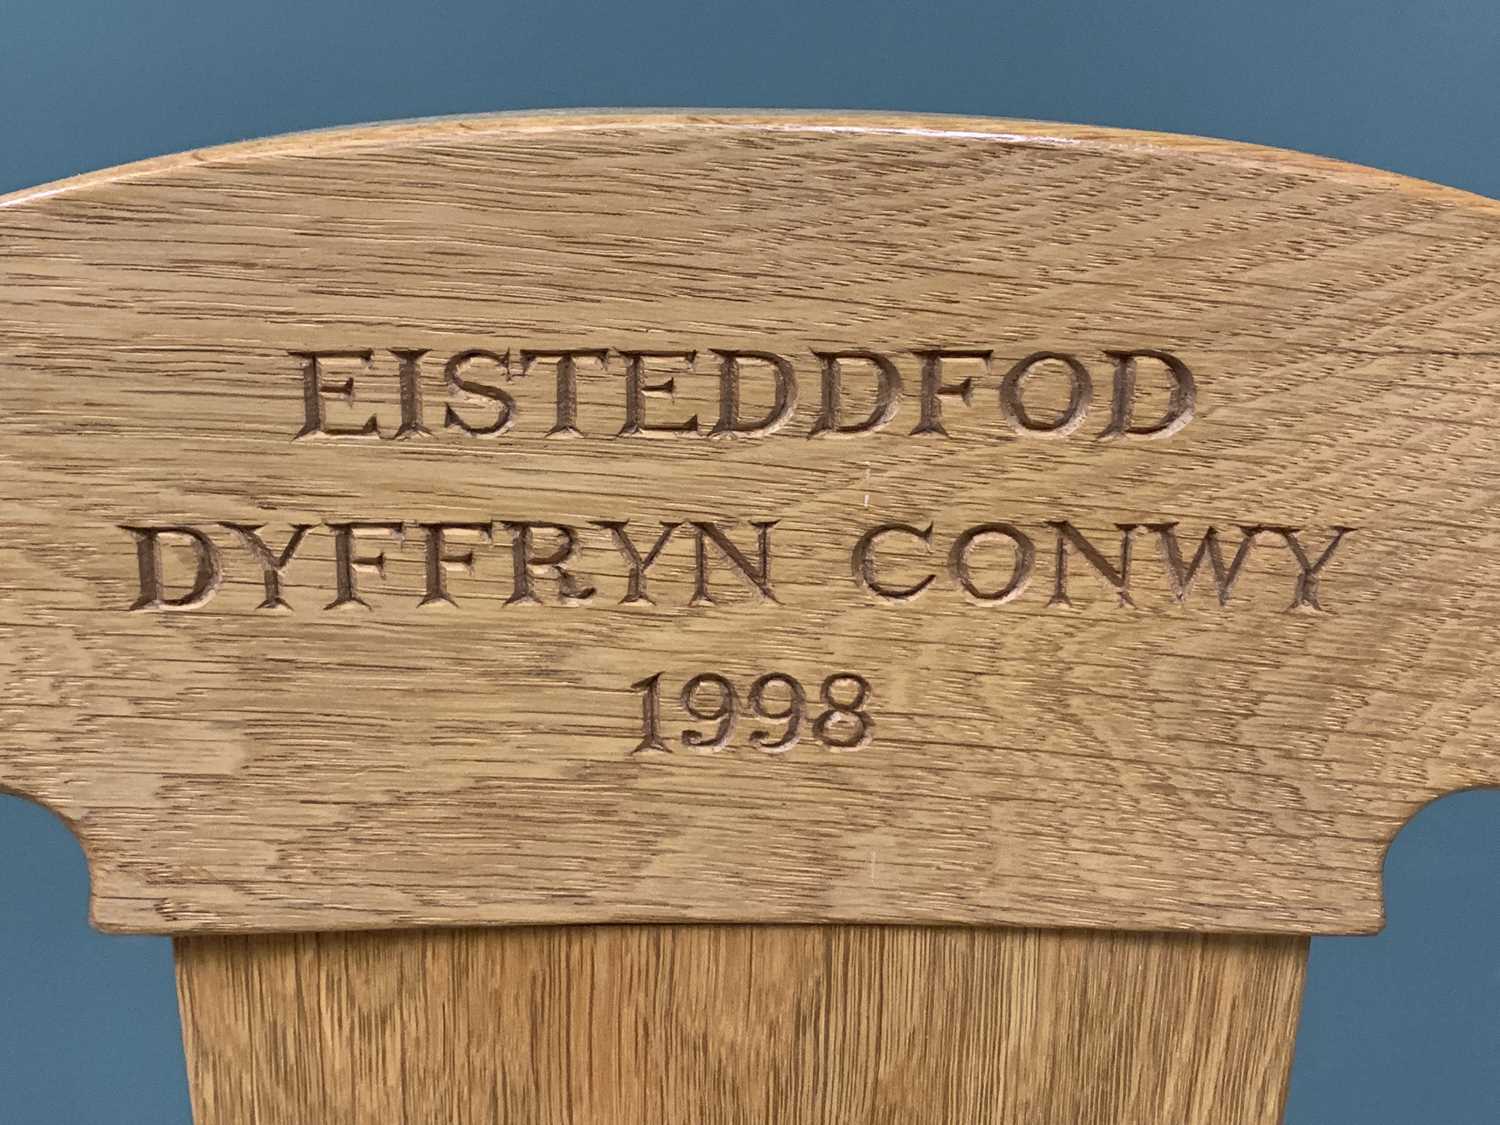 MODERN OAK EISTEDDFOD CHAIR for 'Dyffryn Conwy 1998', stamped M. Rayner to base, 116 (h) x 58 (w) - Image 5 of 6